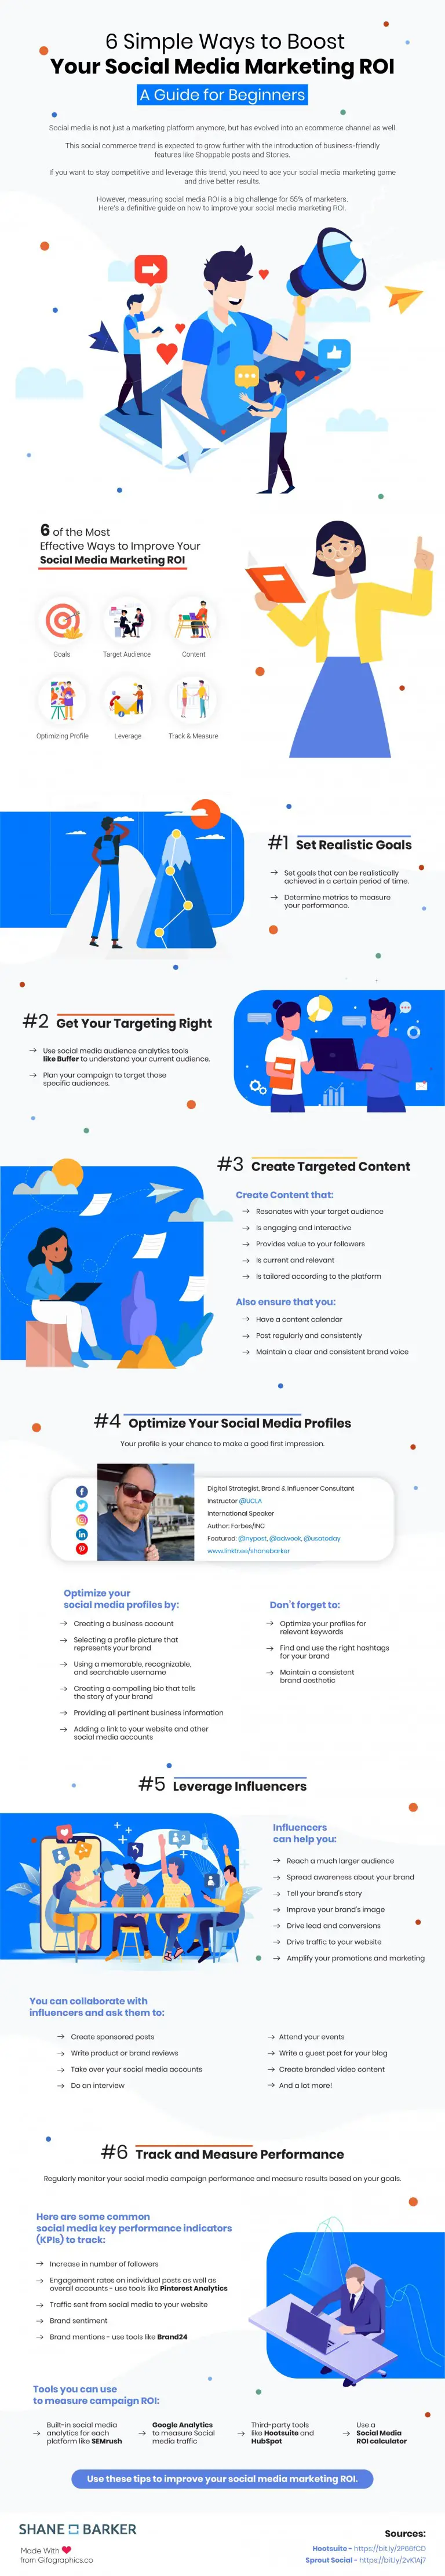 boost-your-social-media-marketing-roi-infographic.jpg